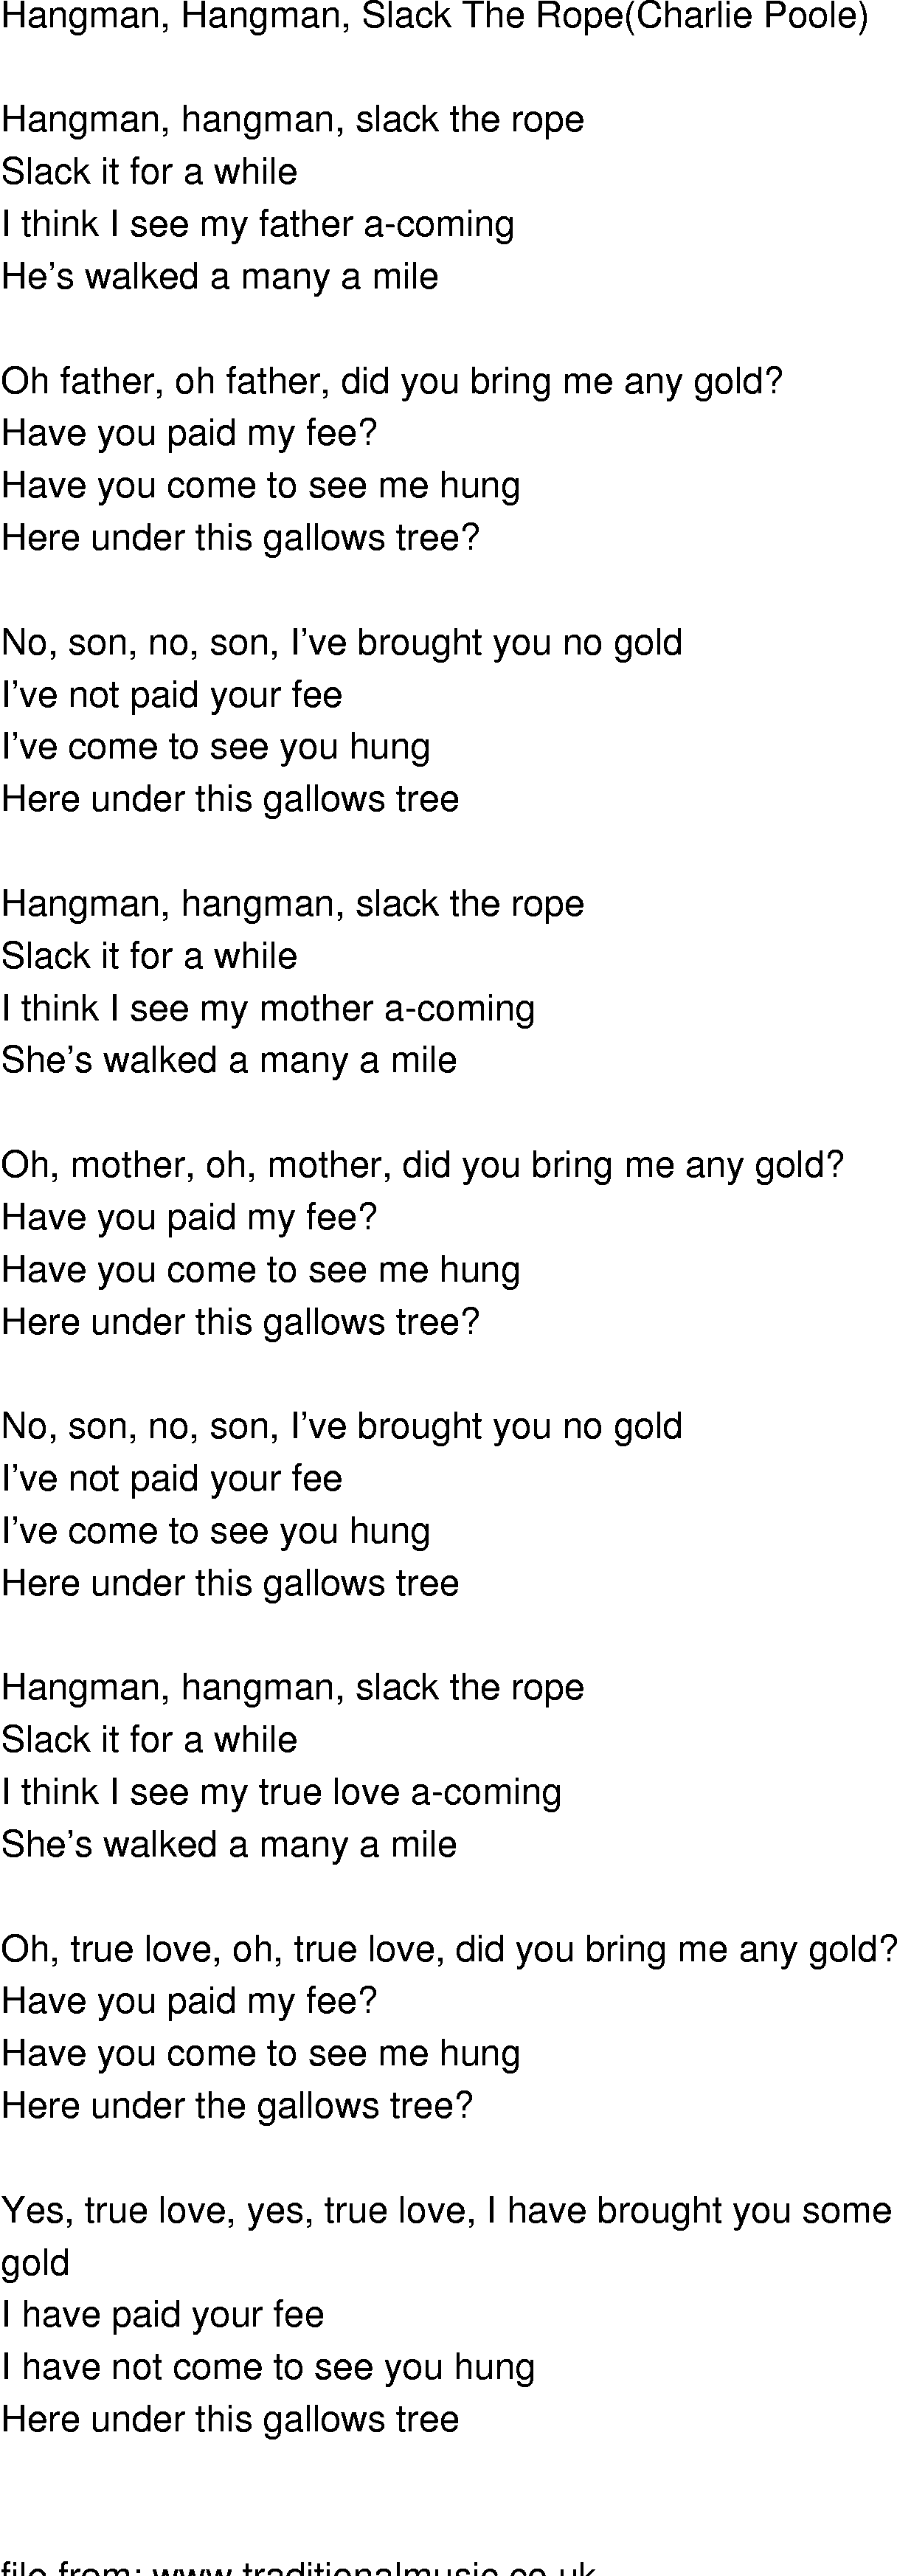 Old-Time (oldtimey) Song Lyrics - hangman, hangman, slack the rope